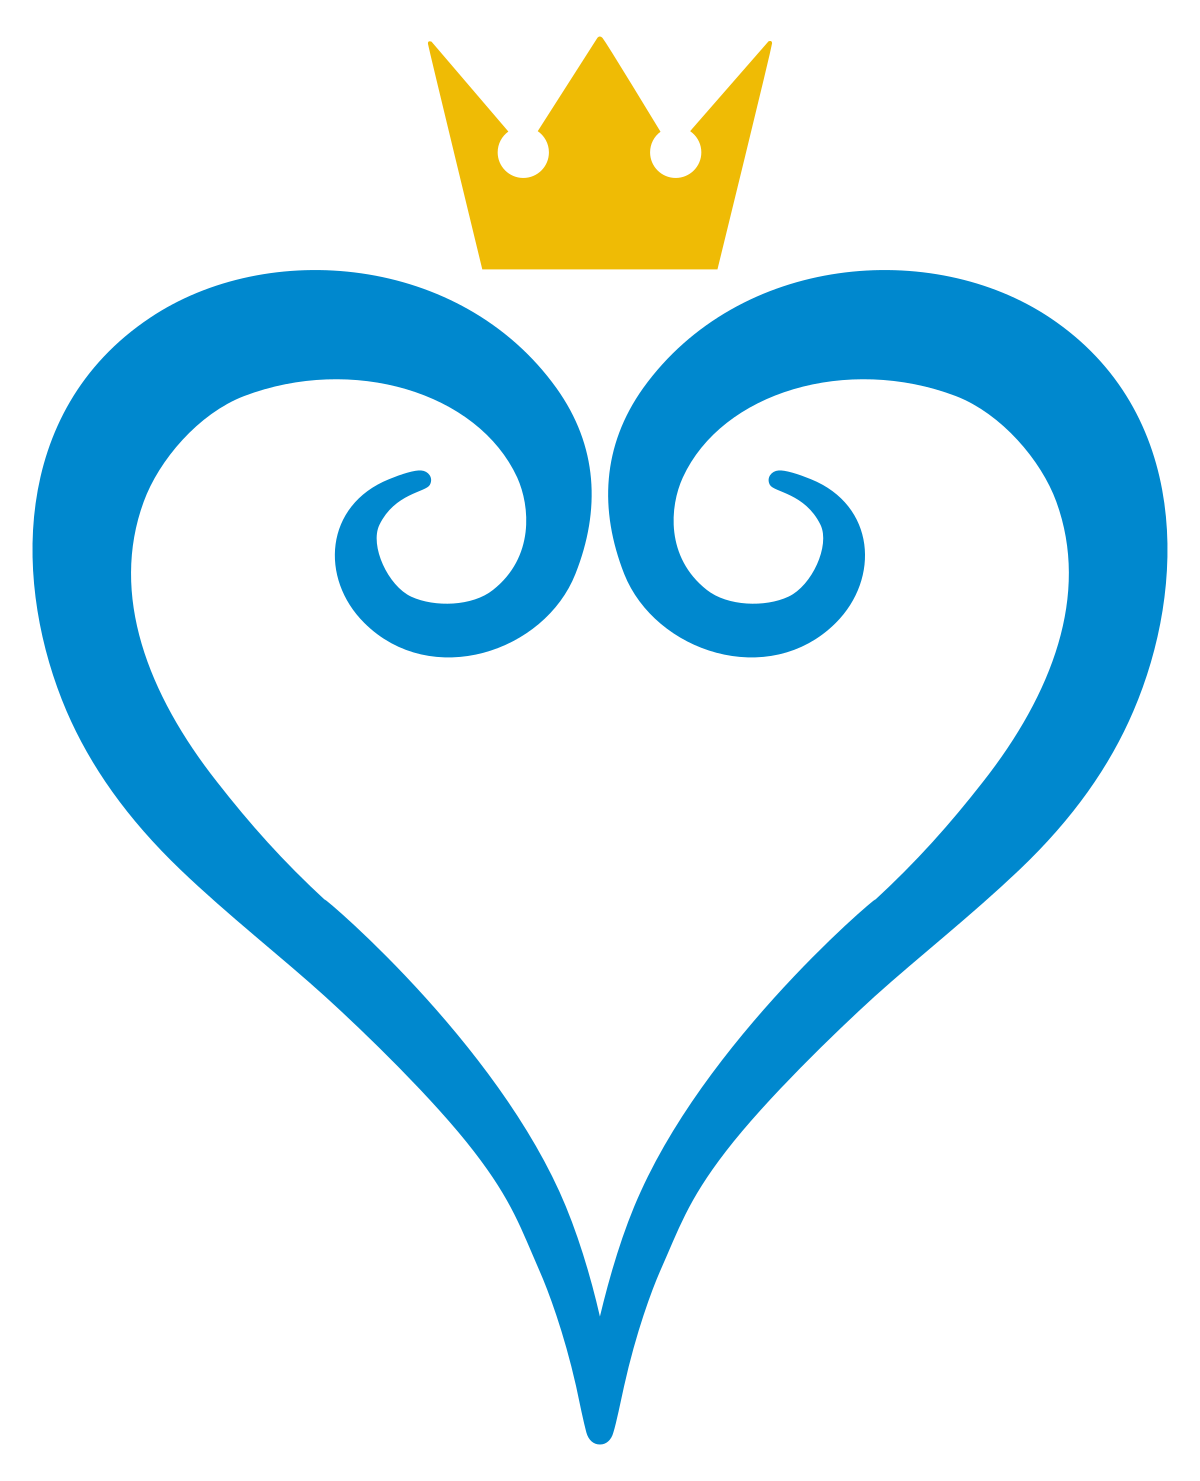 kingdom hearts 2 logo no background download